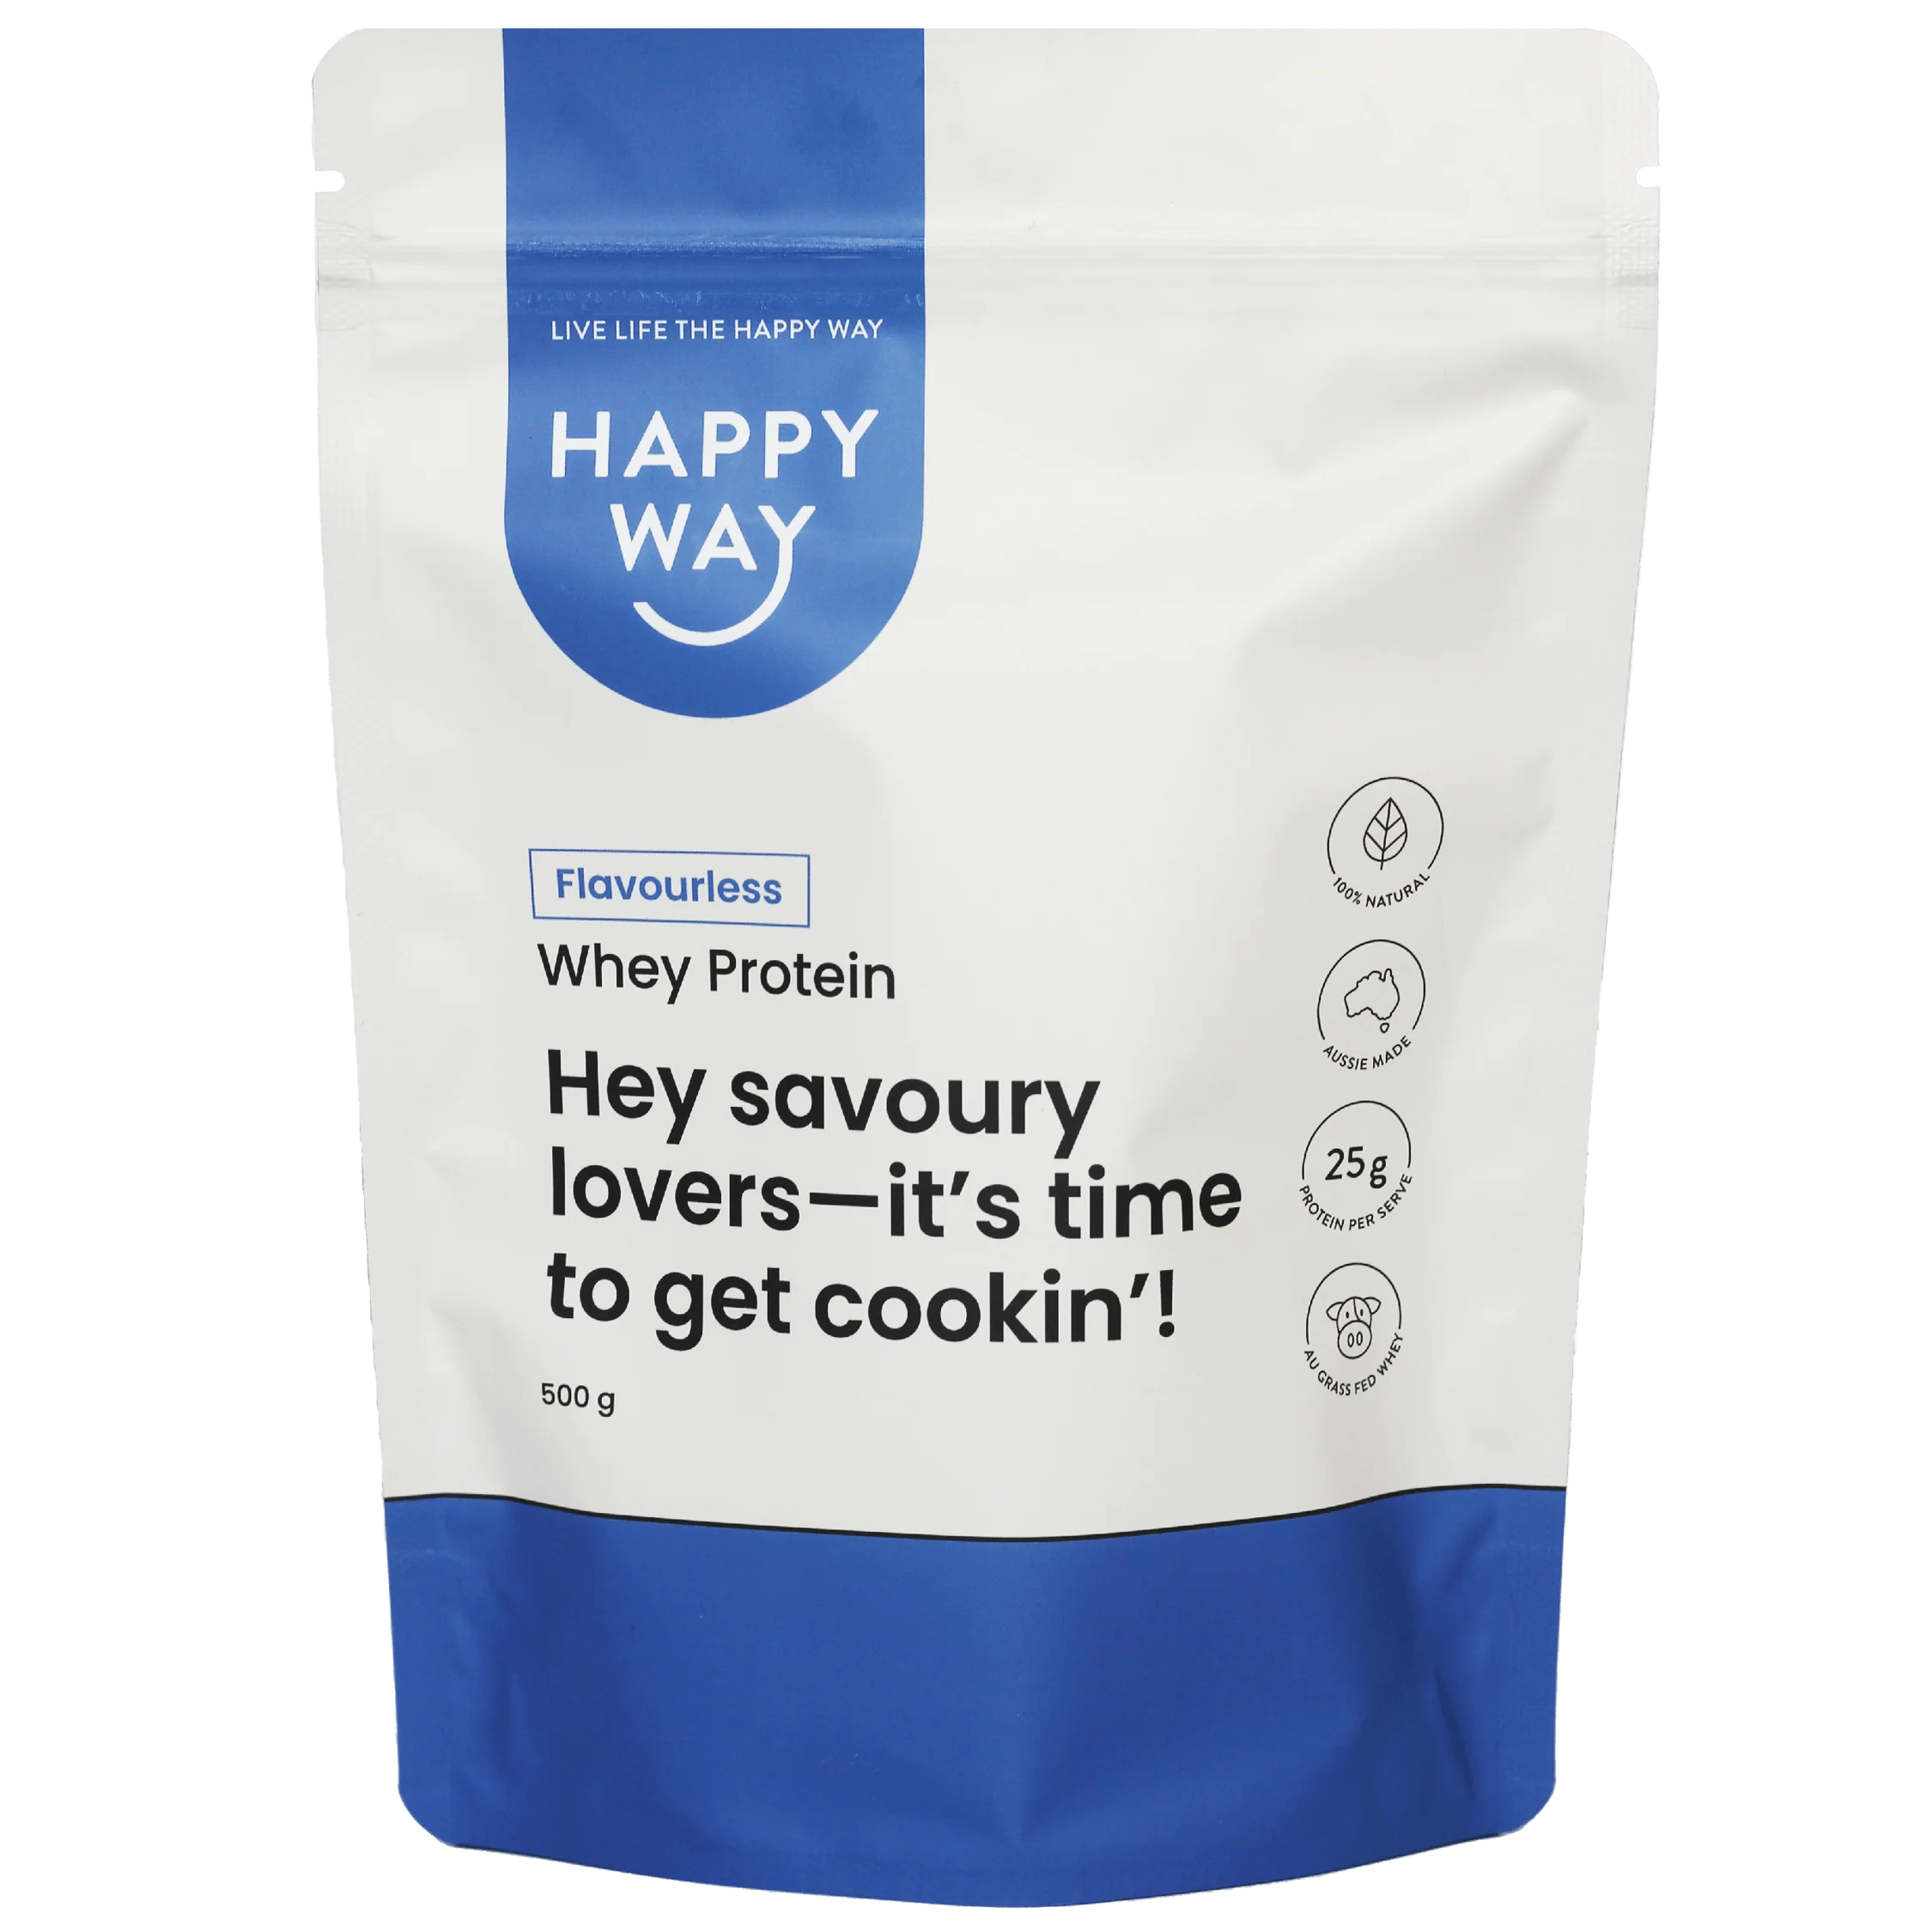 Happyway Whey Protein Powder Flavourless 500g Premium New Zealand Pasture-Fed Whey Protein, Keto Friendly Gluten Free and Non-GMO